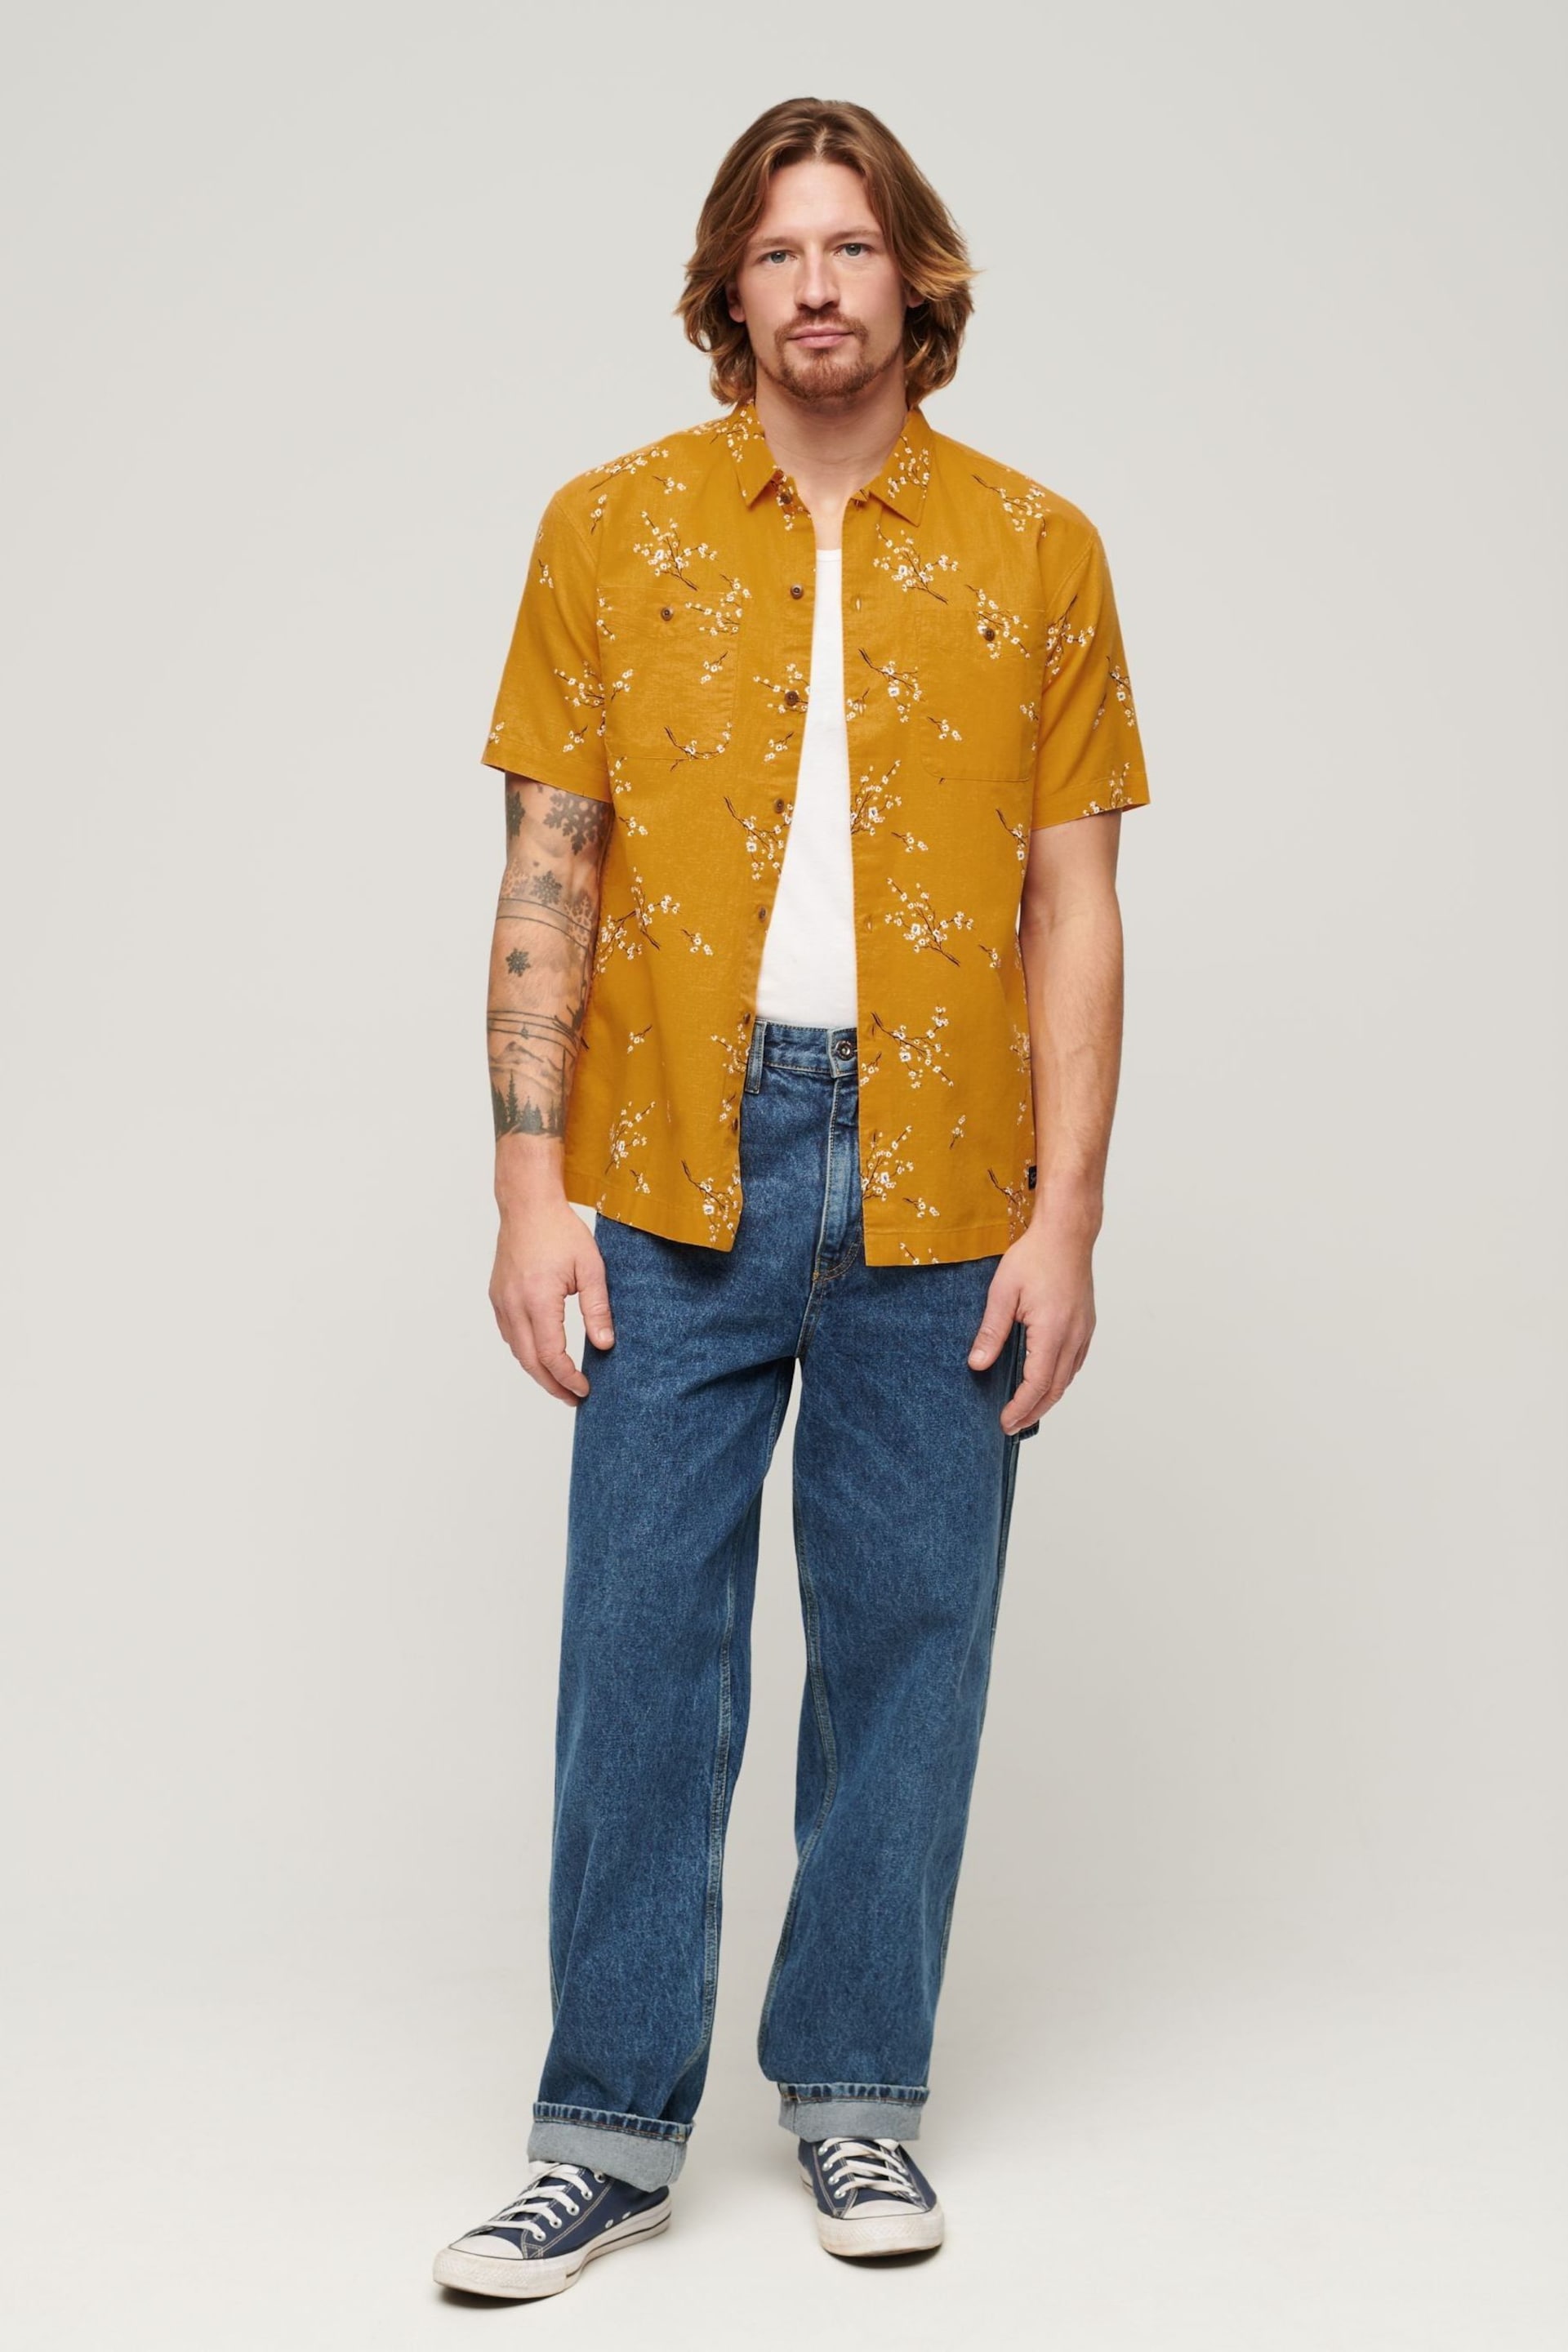 Superdry Golden Blossom Short Sleeved Beach Shirt - Image 3 of 6